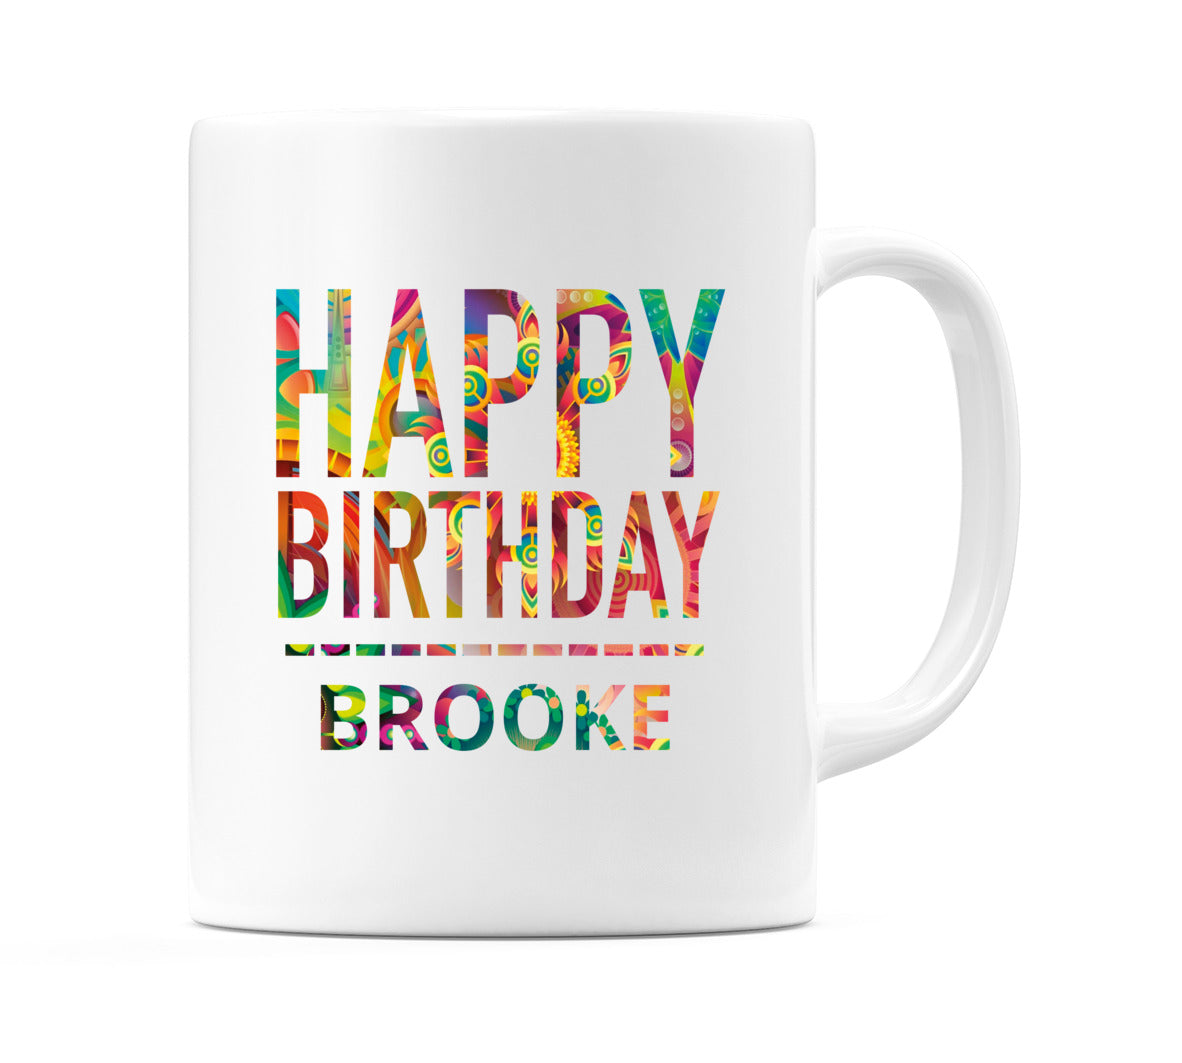 Happy Birthday Brooke (Tie Dye Effect) Mug Cup by WeDoMugs